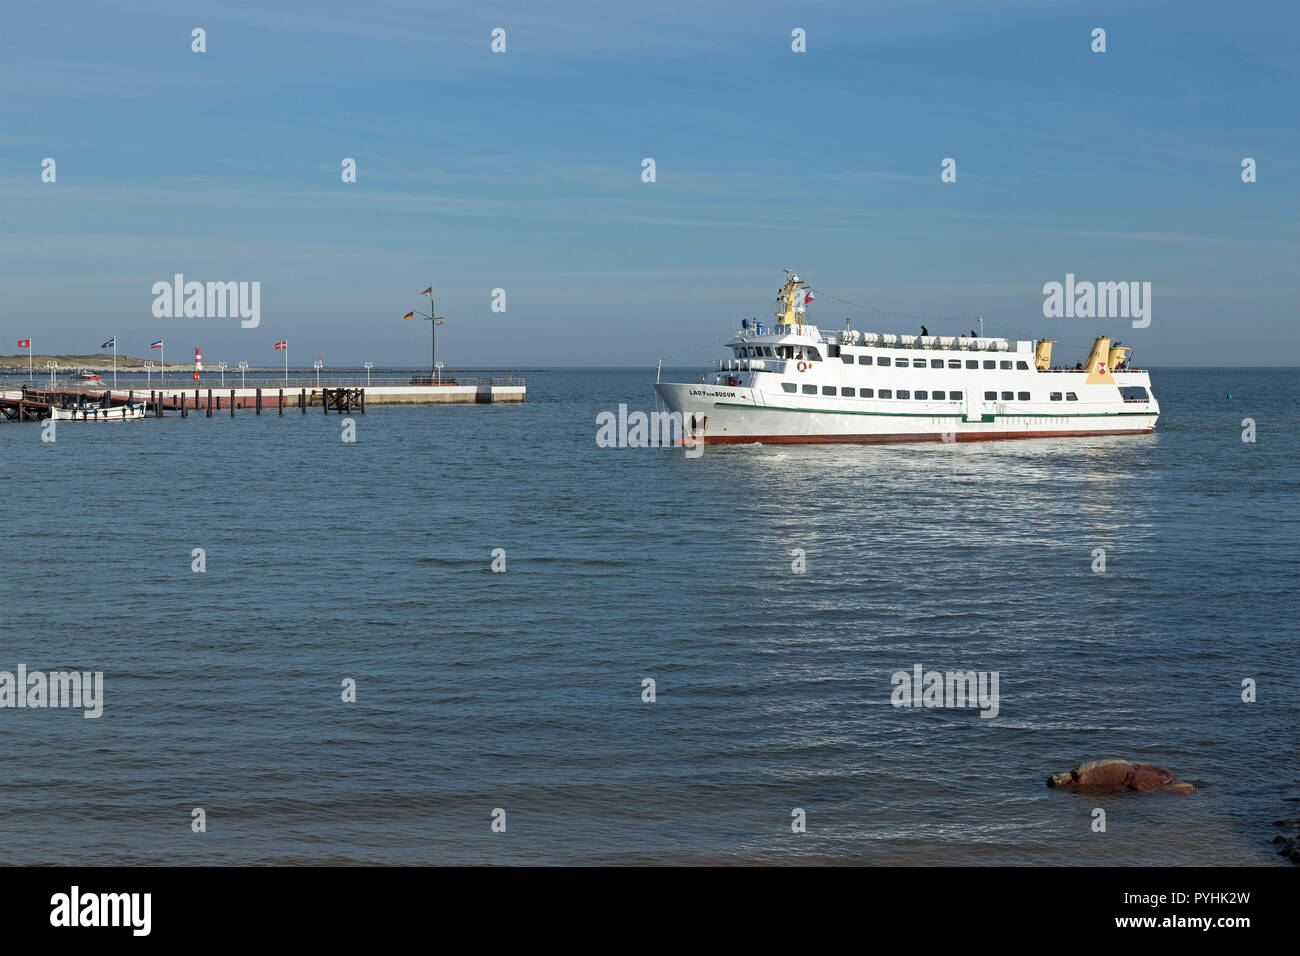 excursion boat Lady von Buesum, Heligoland, Schleswig-Holstein, Germany Stock Photo